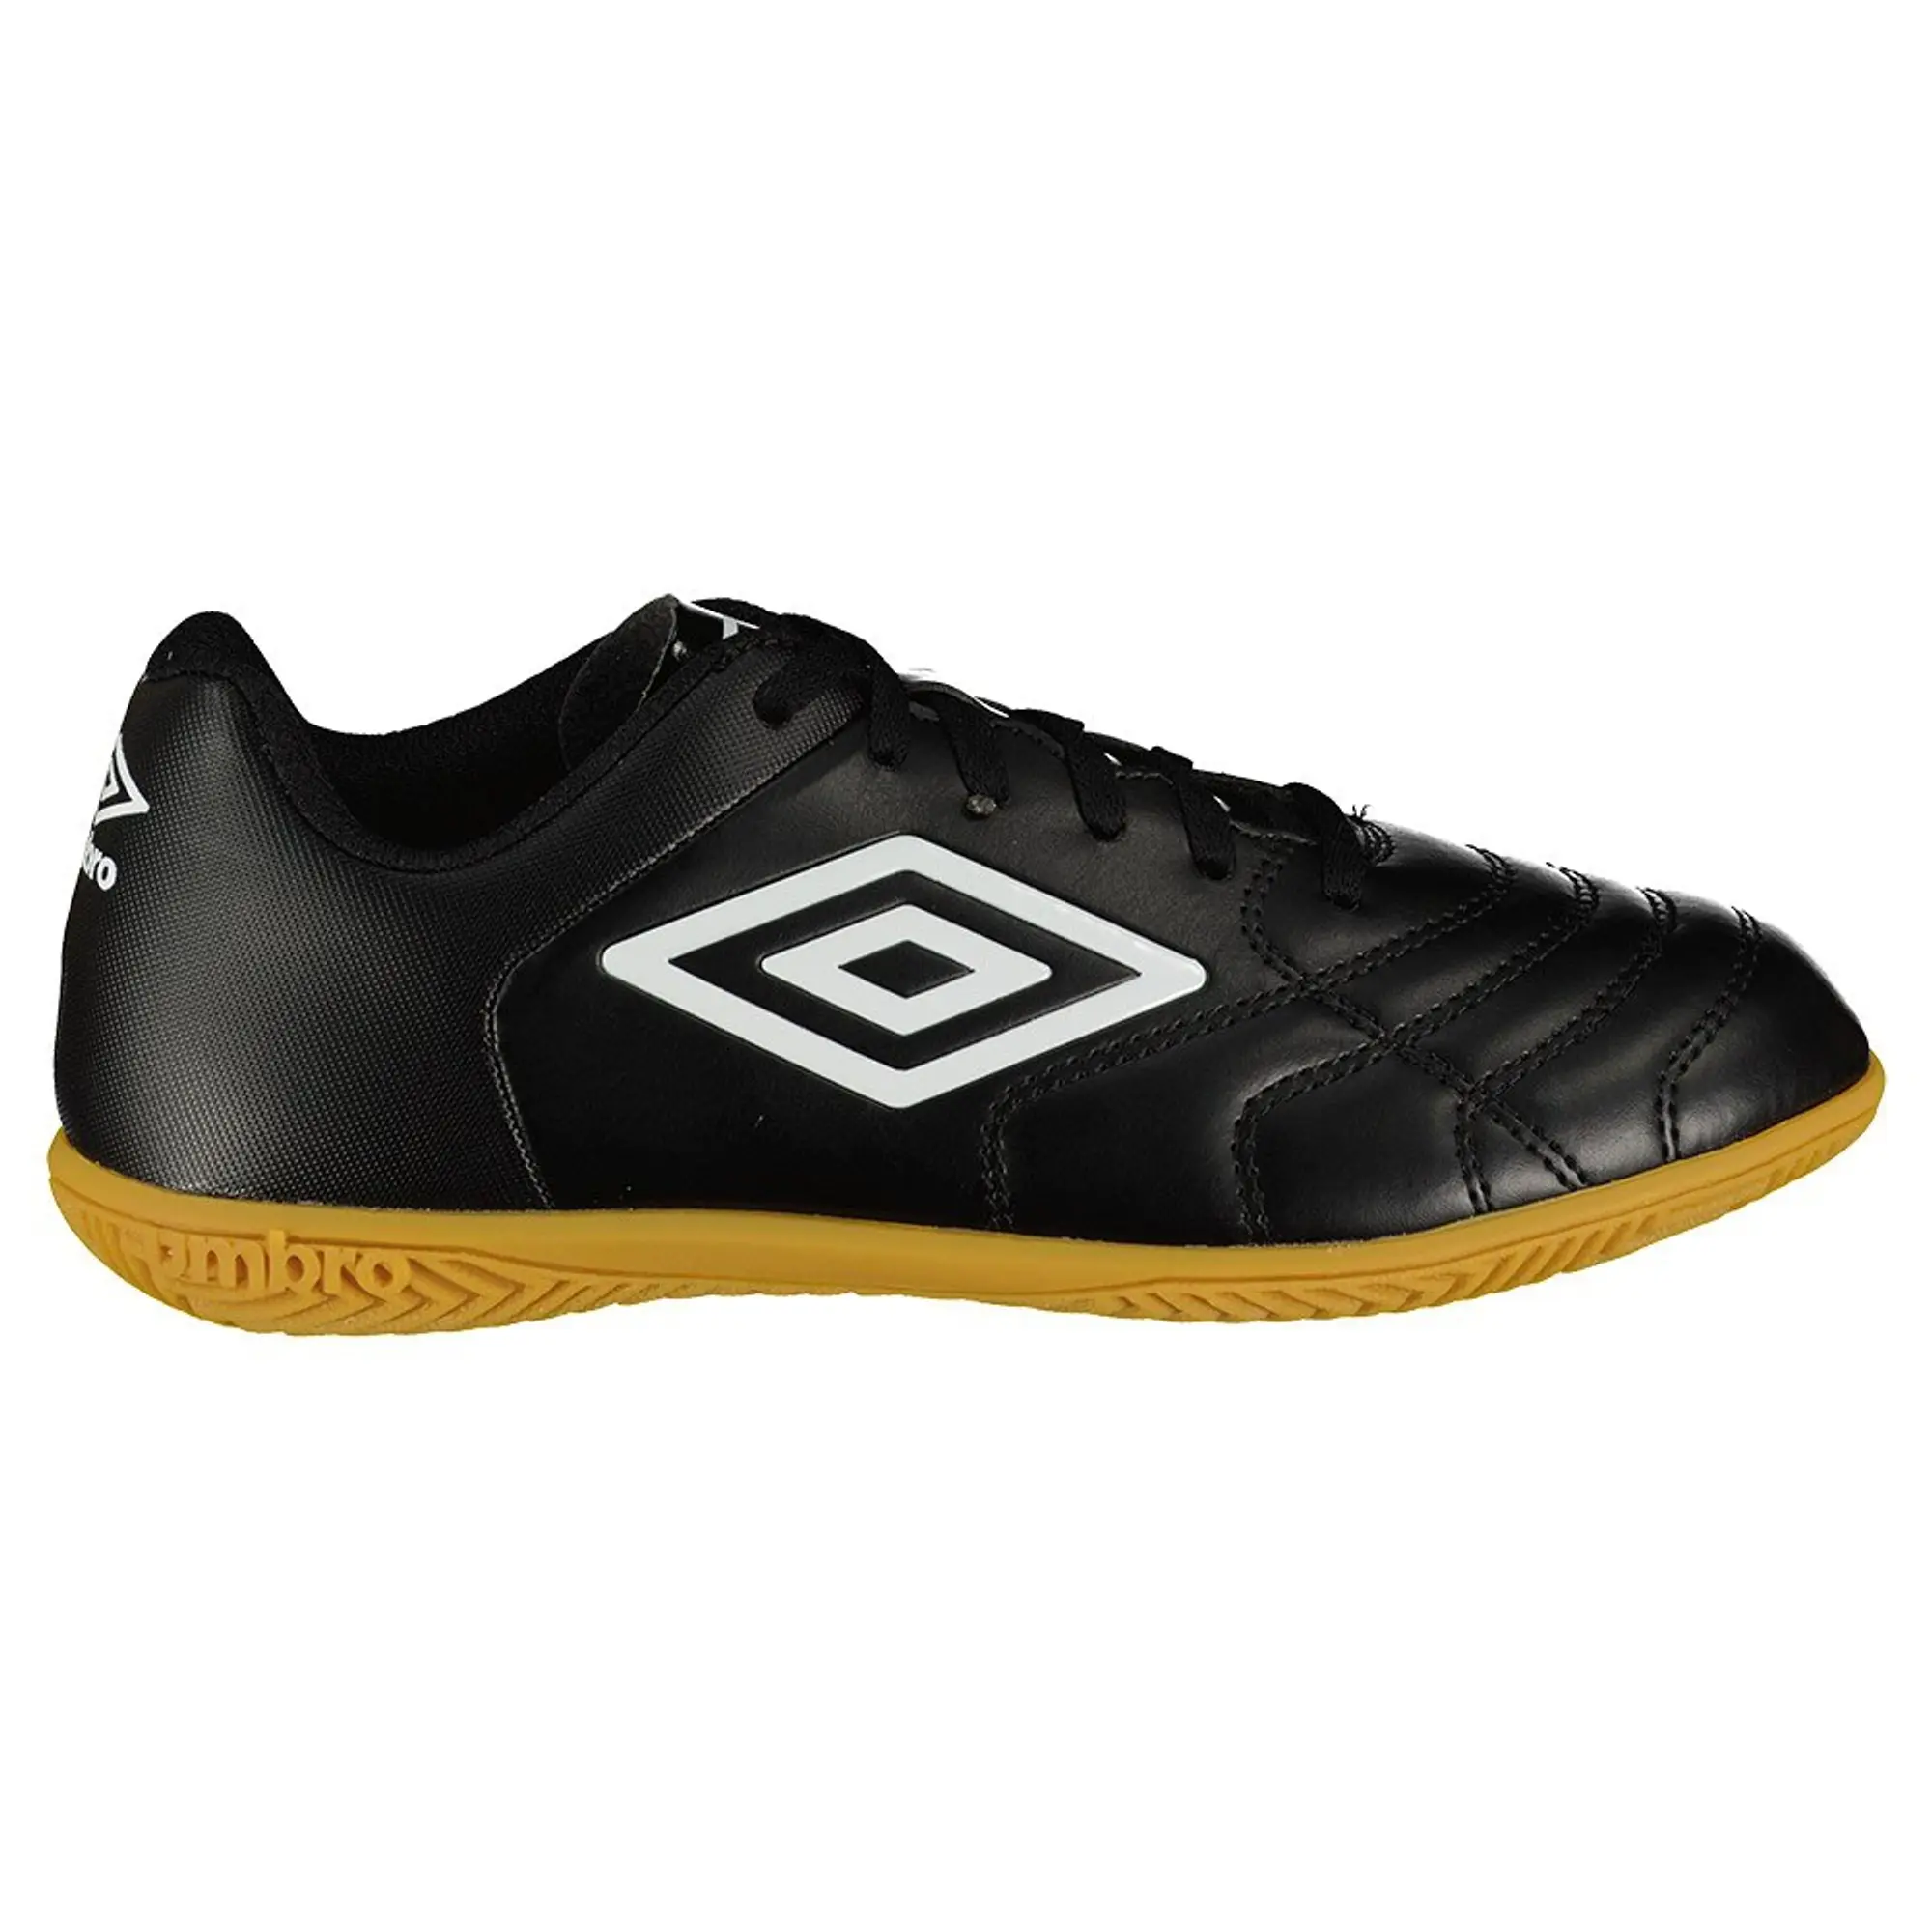 Umbro Classico Xi Ic Football Boots  - Black